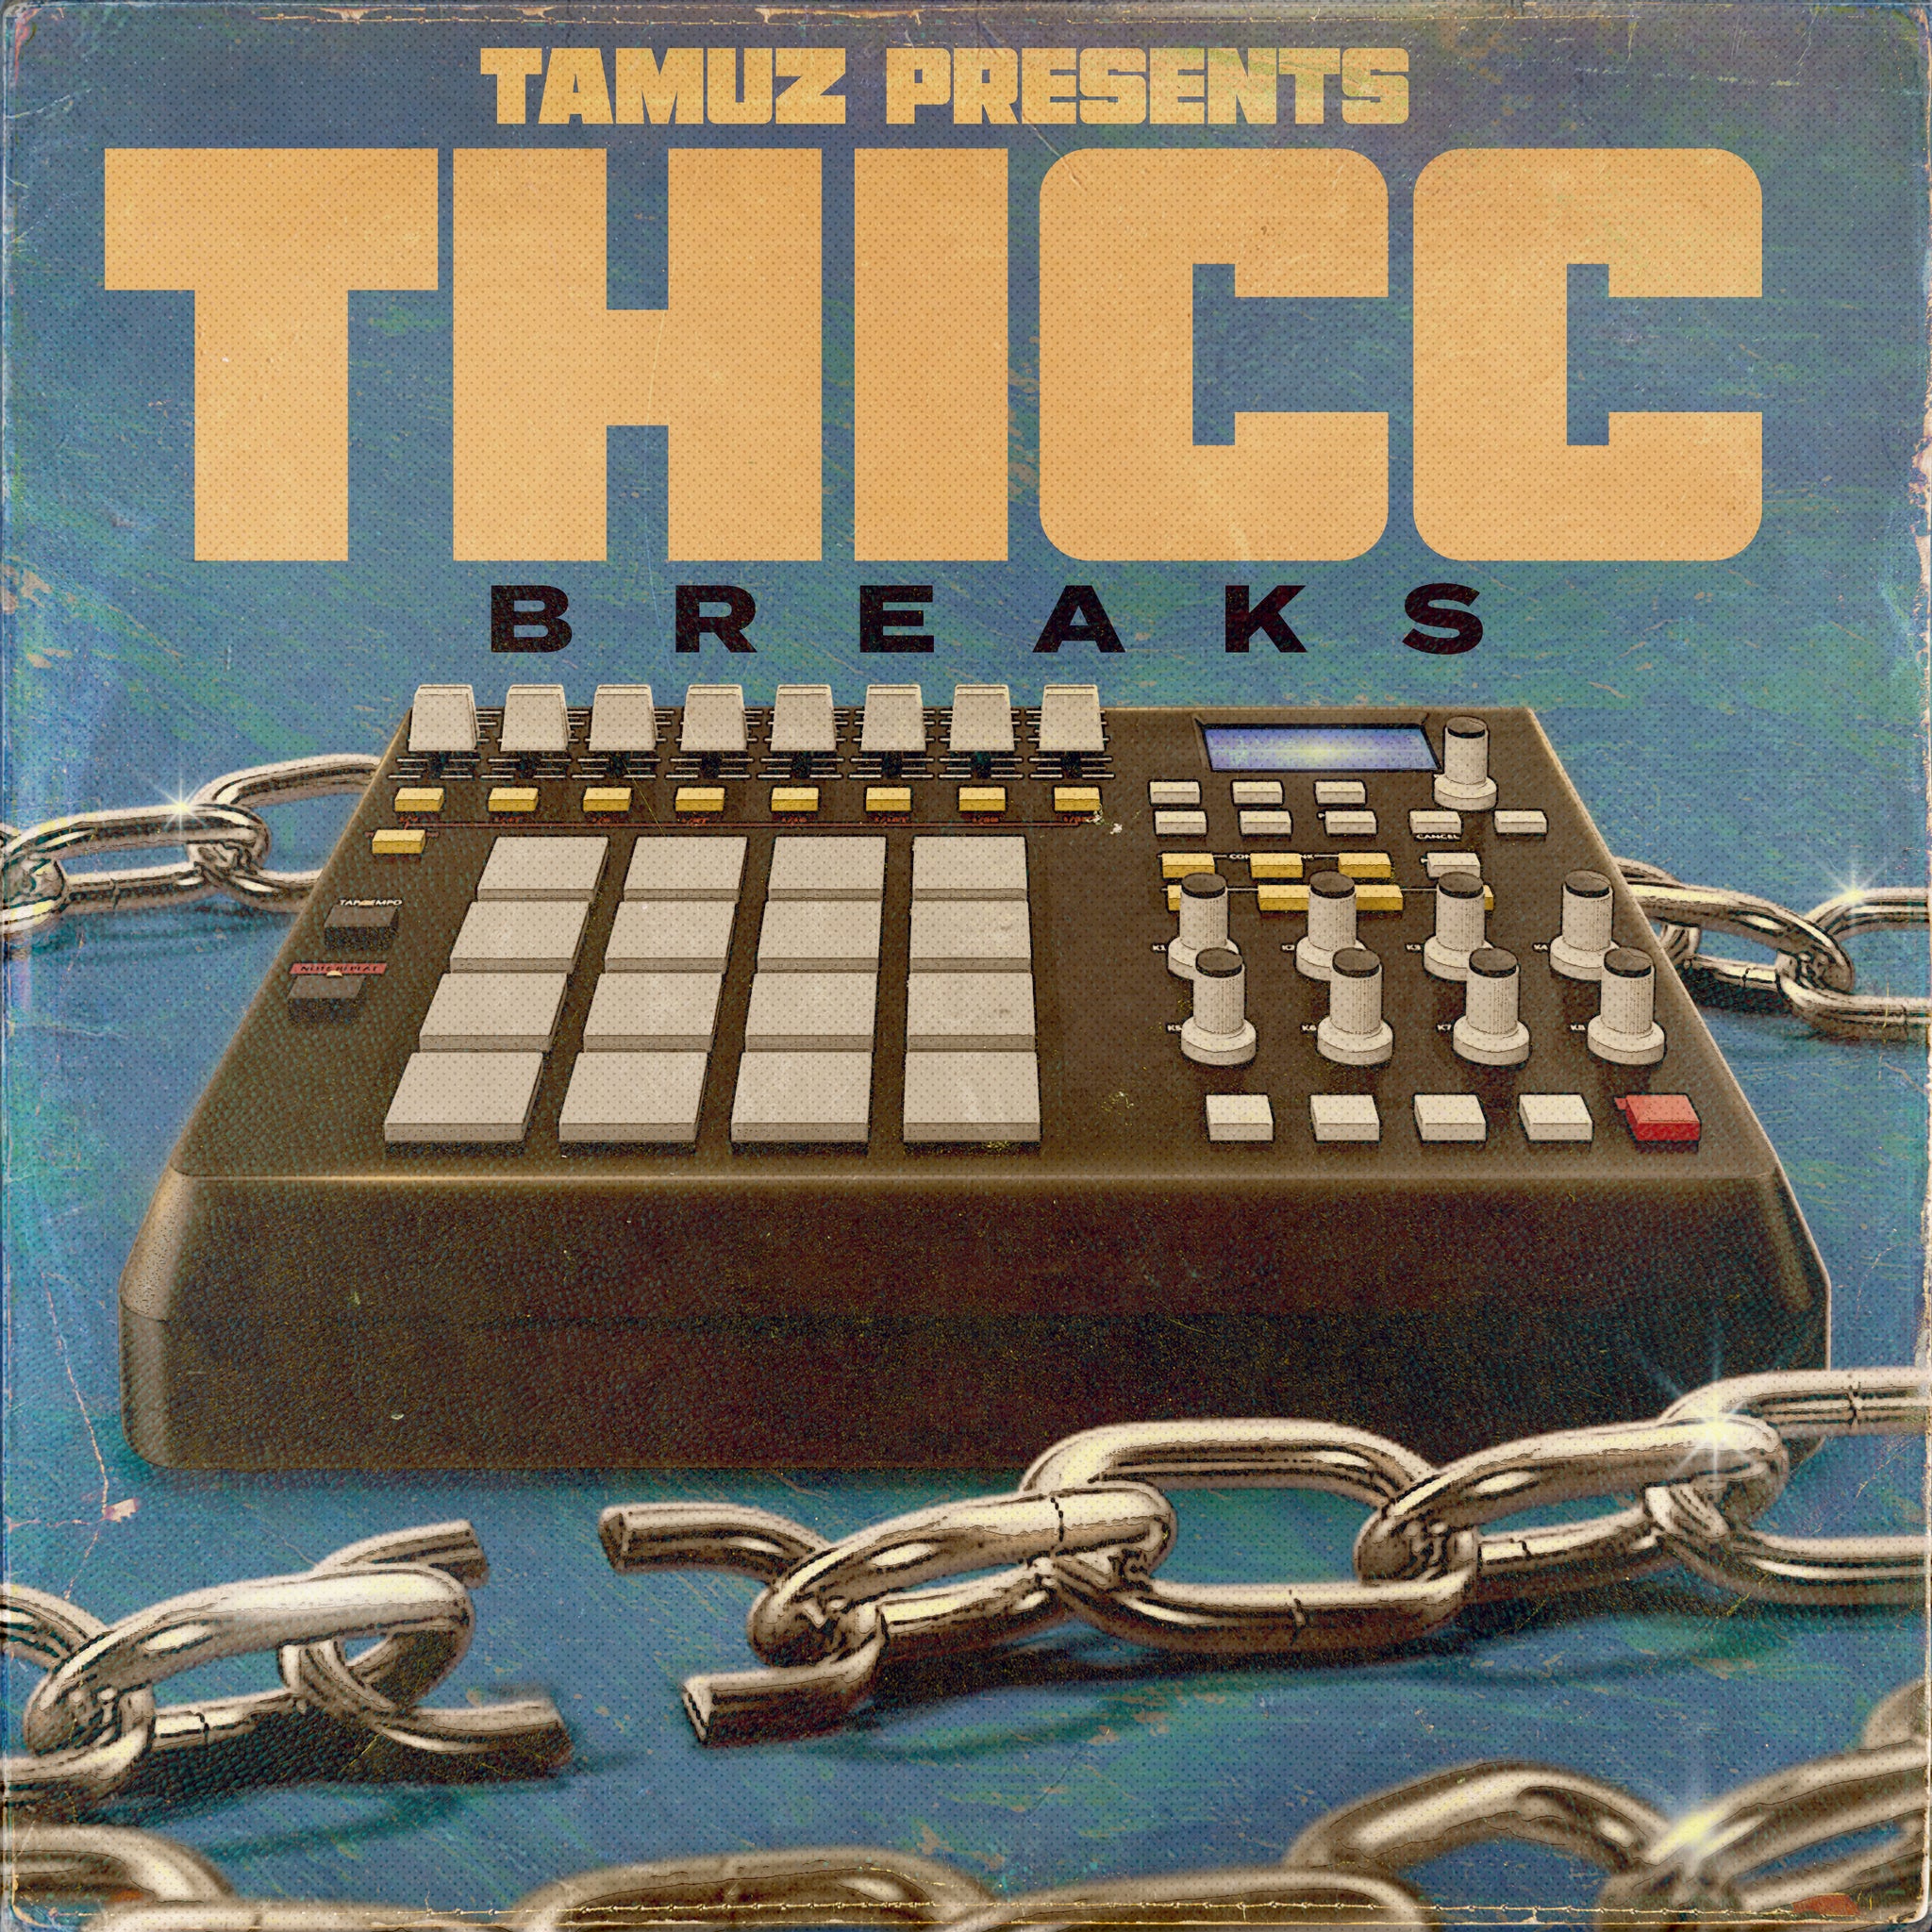 thicc breaks by tamuz